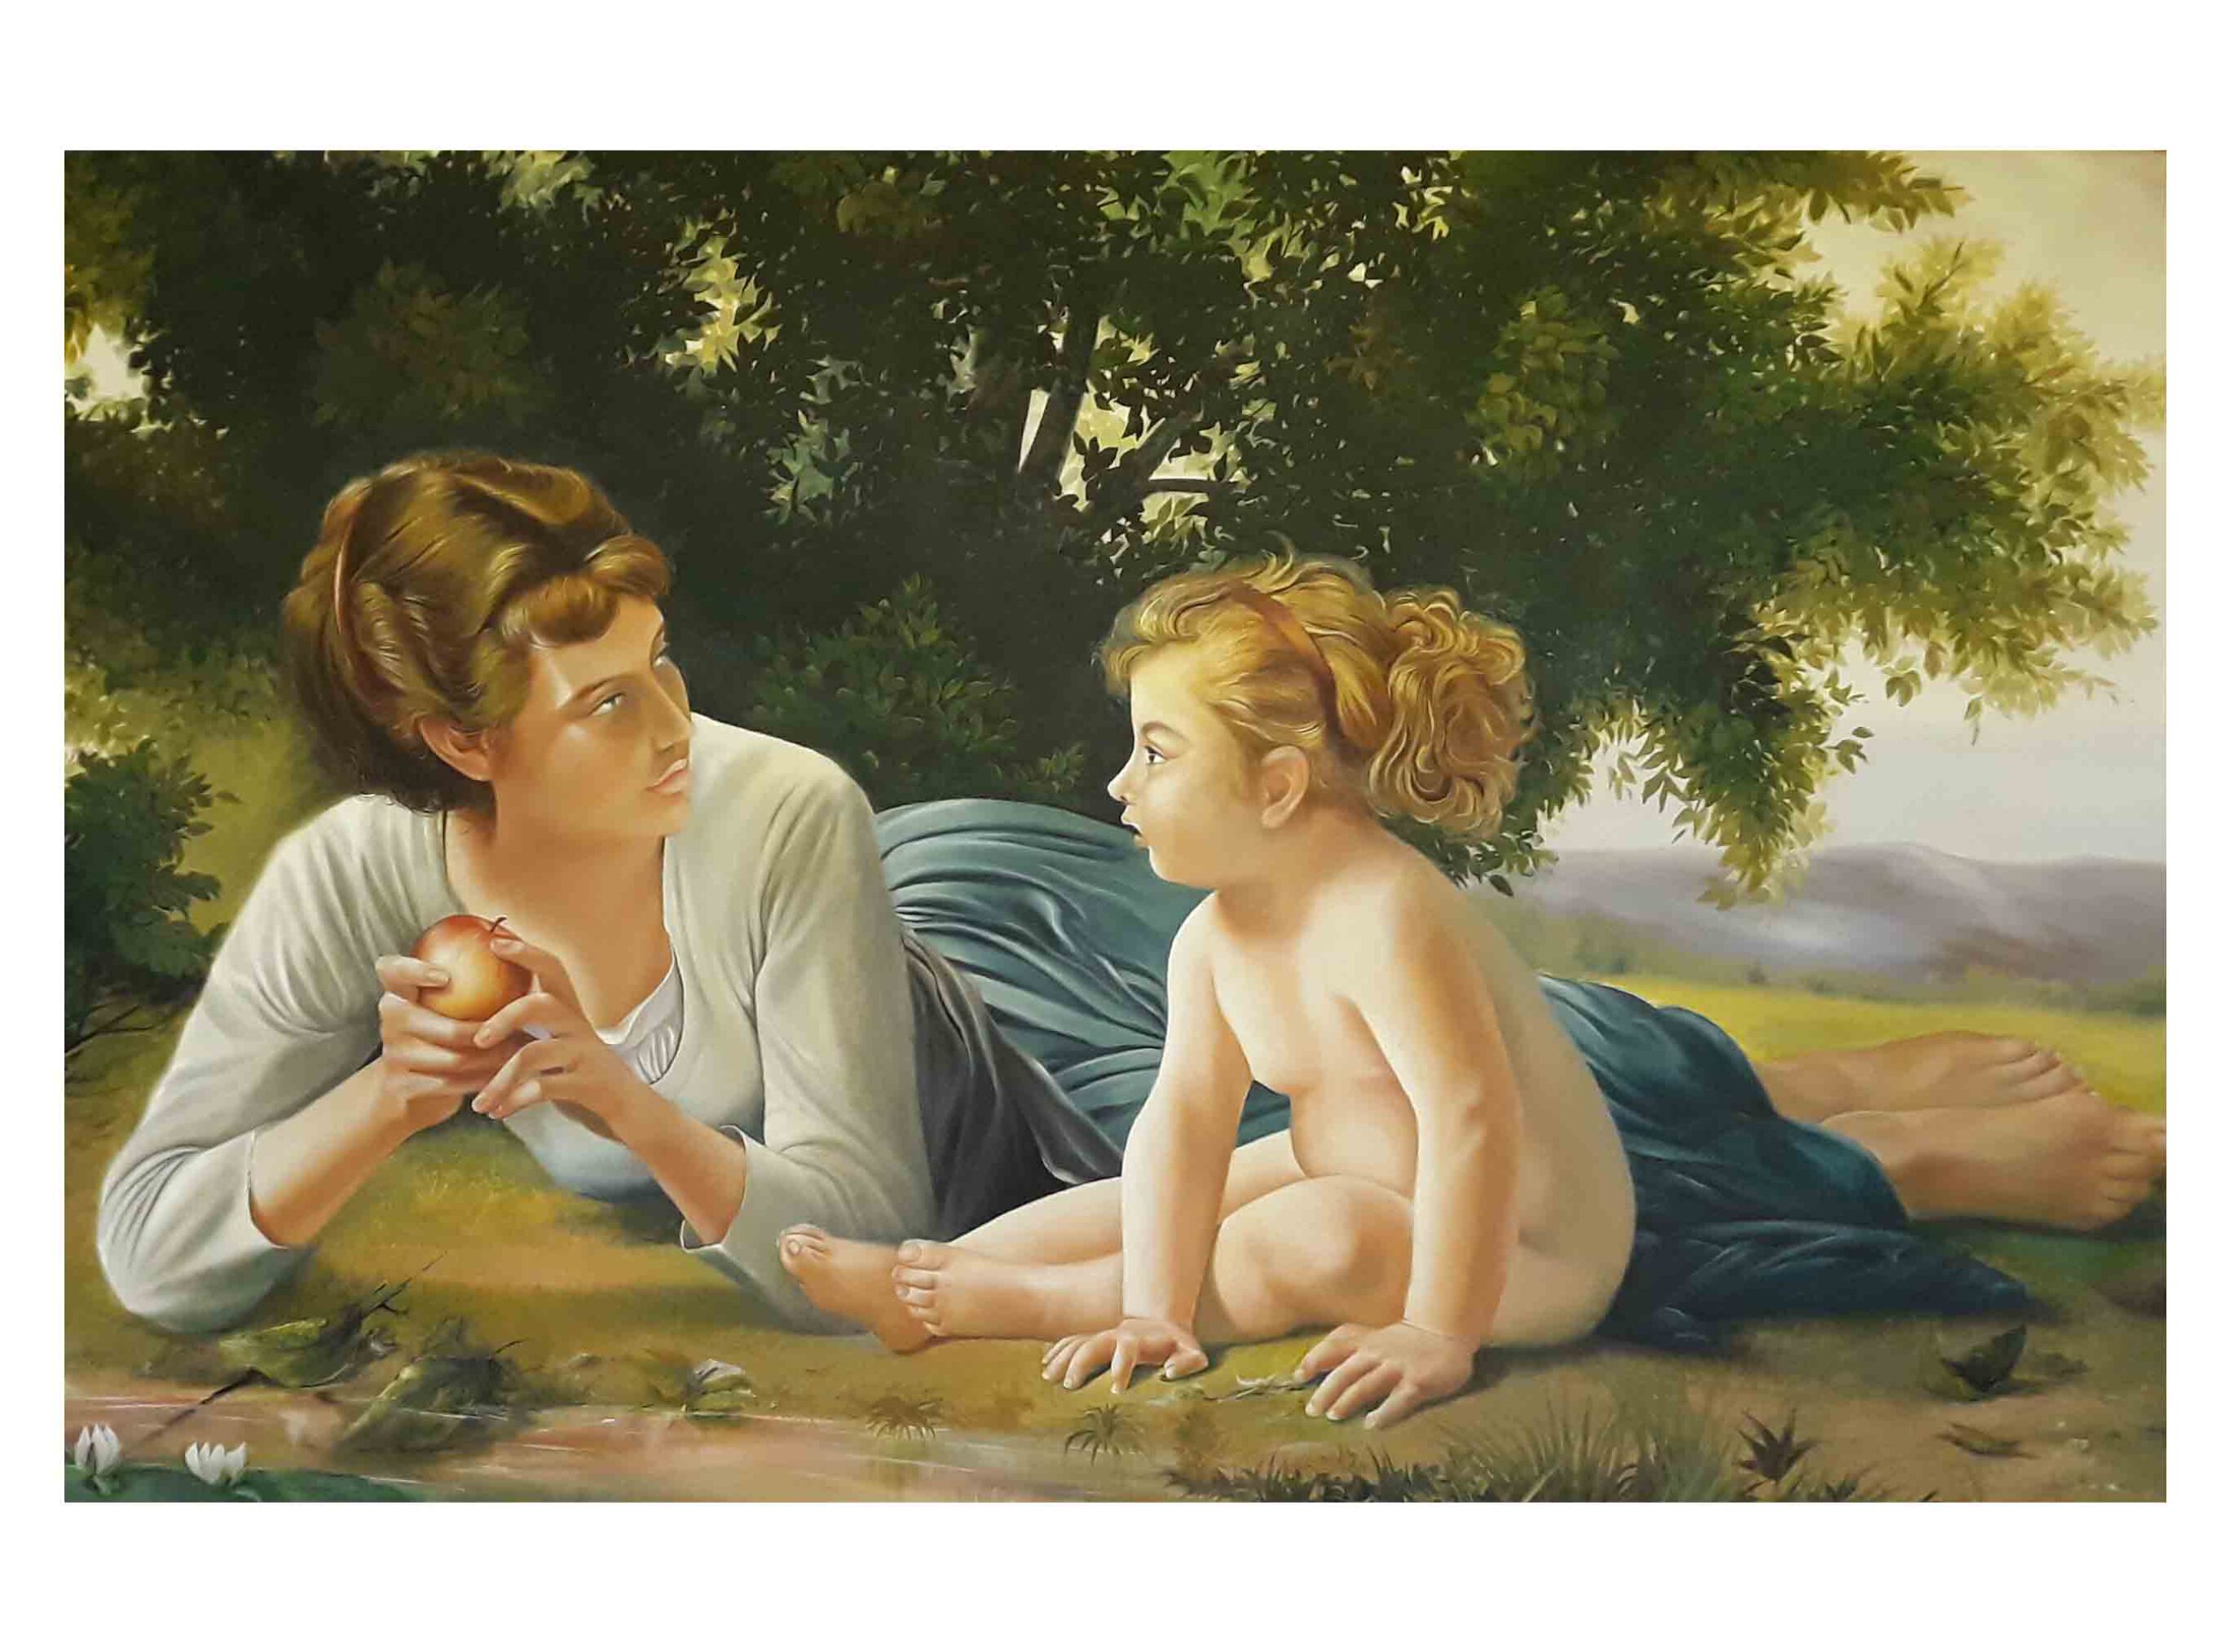  تابلو نقاشی مادر و دختر سبک رئالیسم، تکنیک رنگ روغن، تابلو نقاشی کادویی و تابلو نقاشی دکوری 